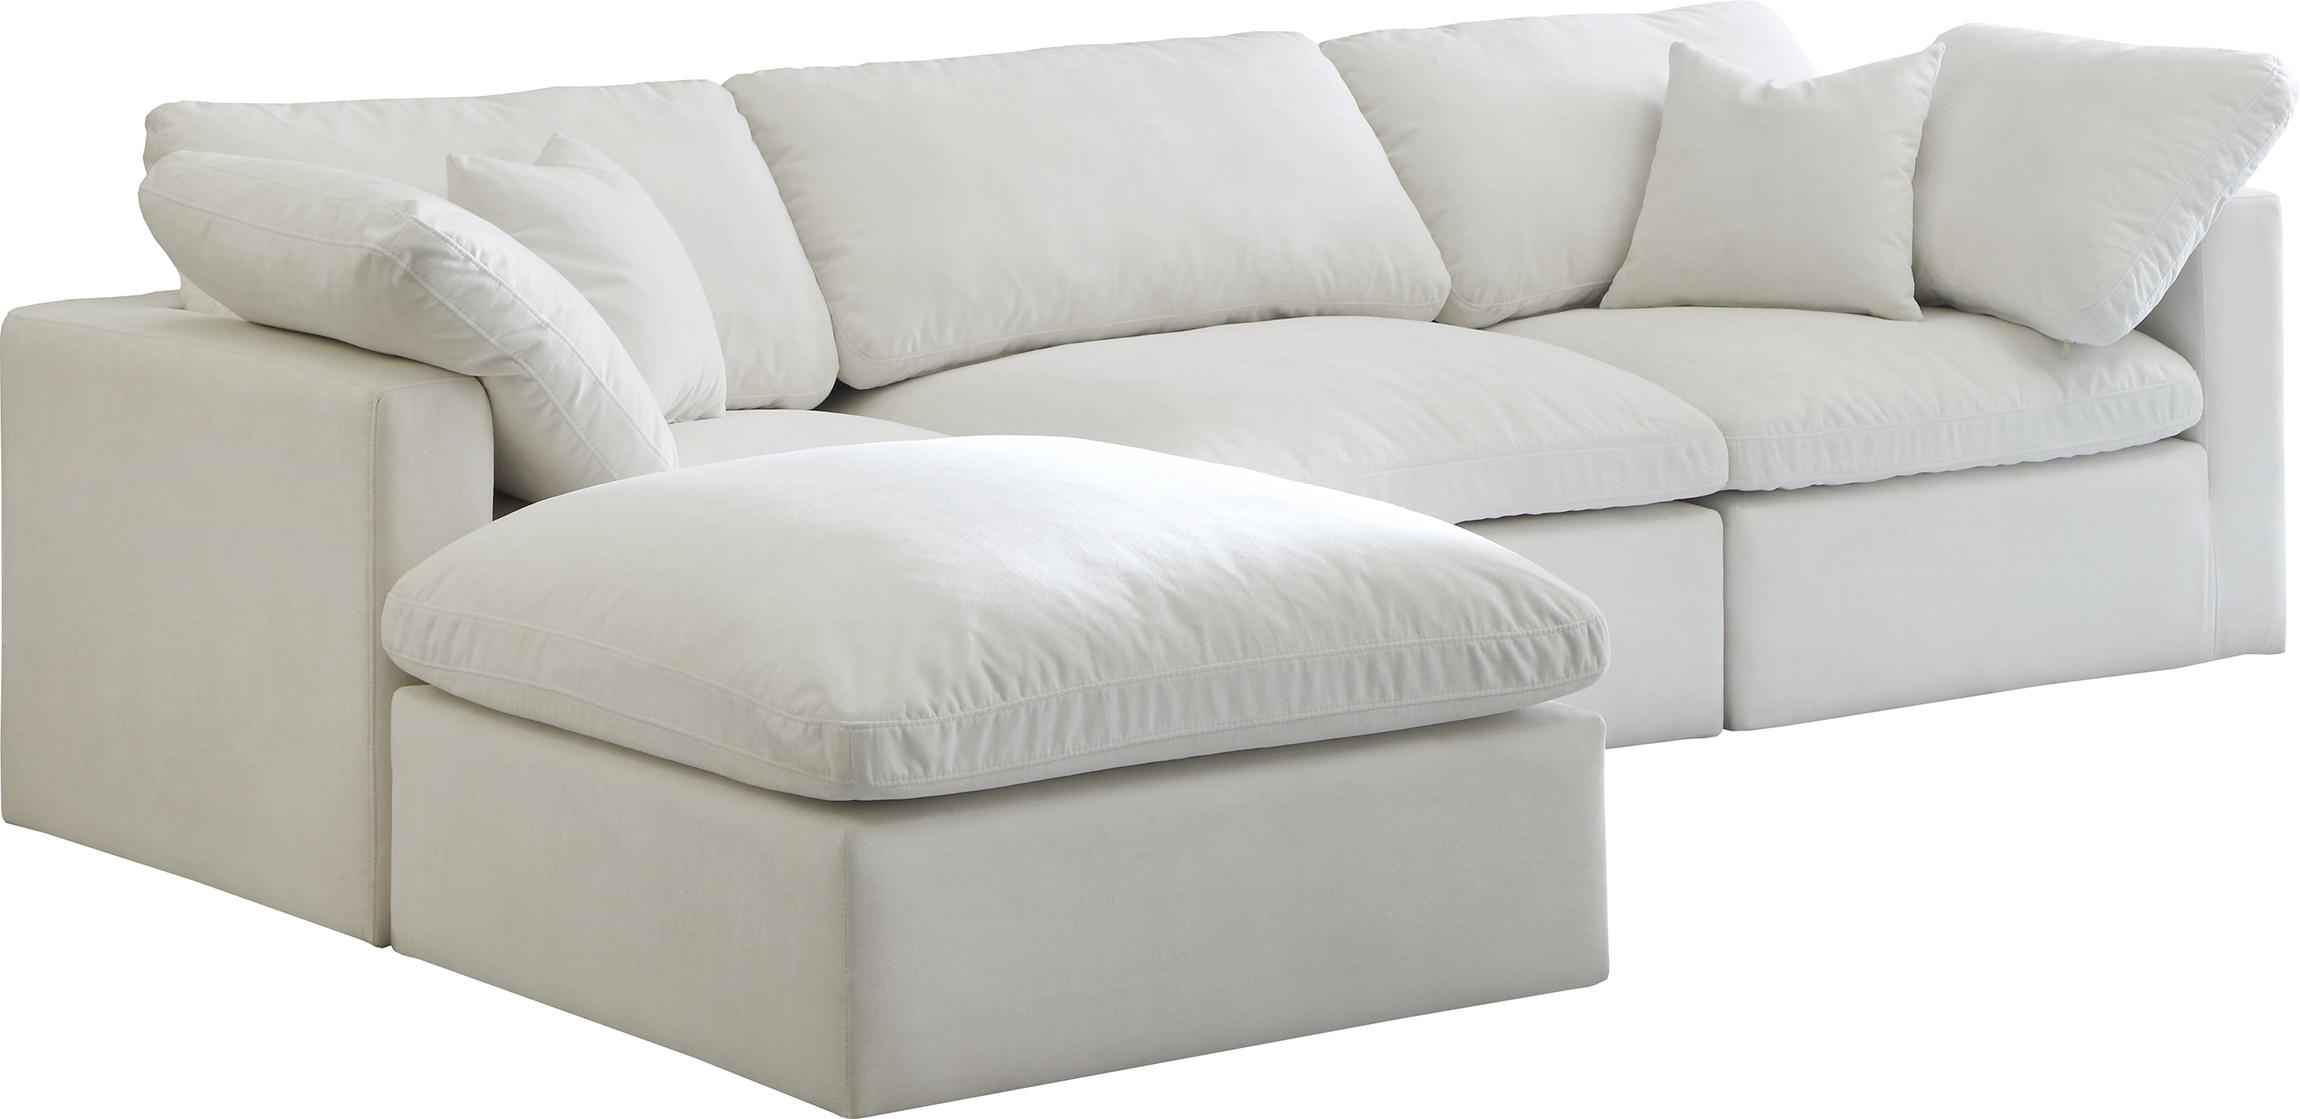 Contemporary, Modern Sectional Sofa Cloud CREAM CREAM-Sec-Cloud in Cream Fabric